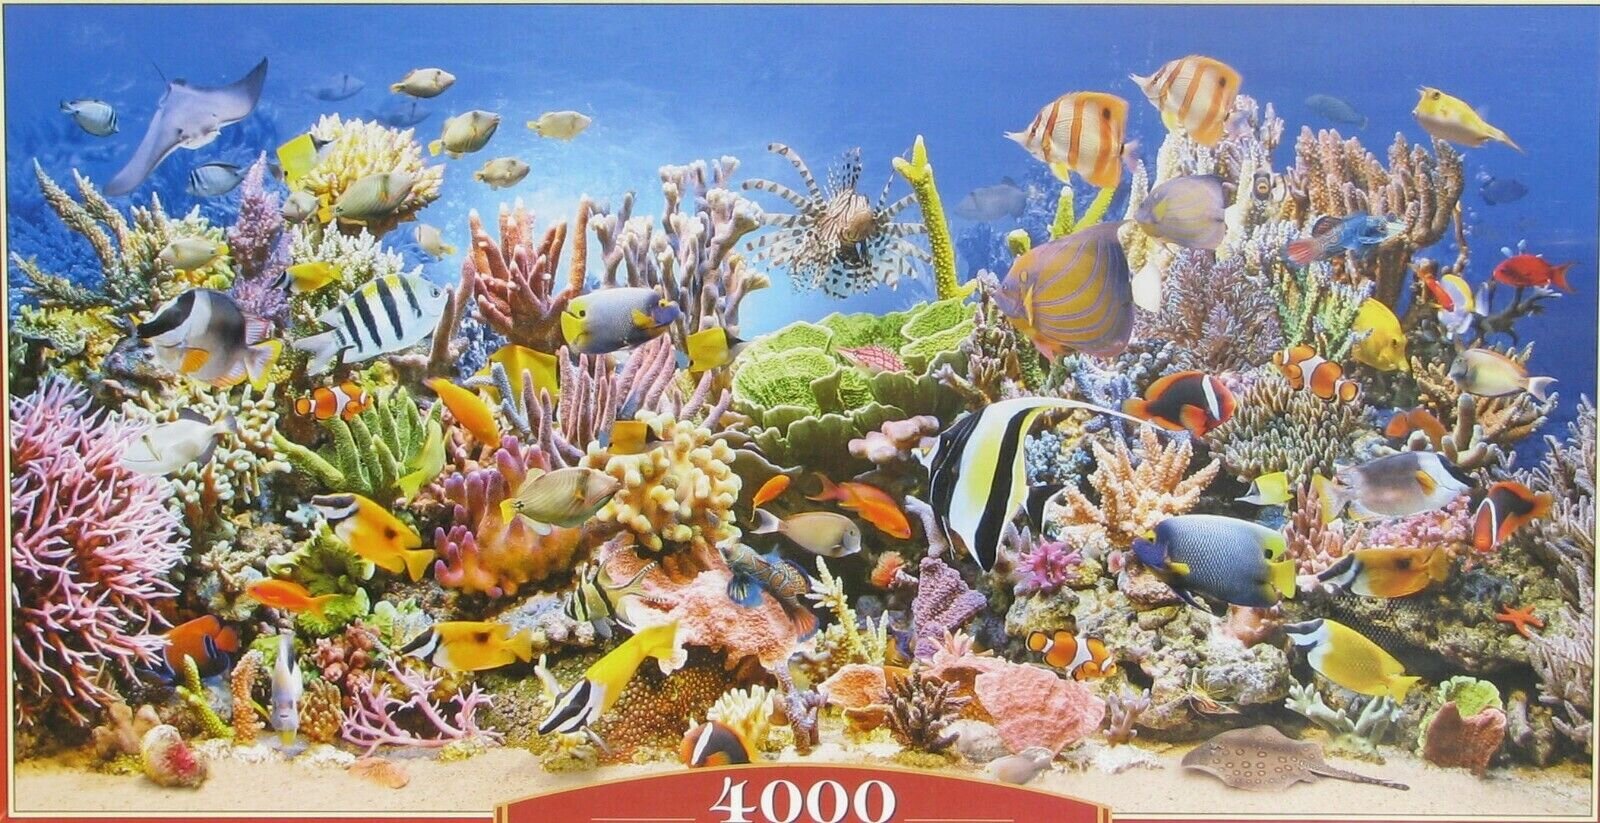 Pusle Castorland Puzzle Underwater Life, 4000-osaline цена и информация | Pusled | kaup24.ee